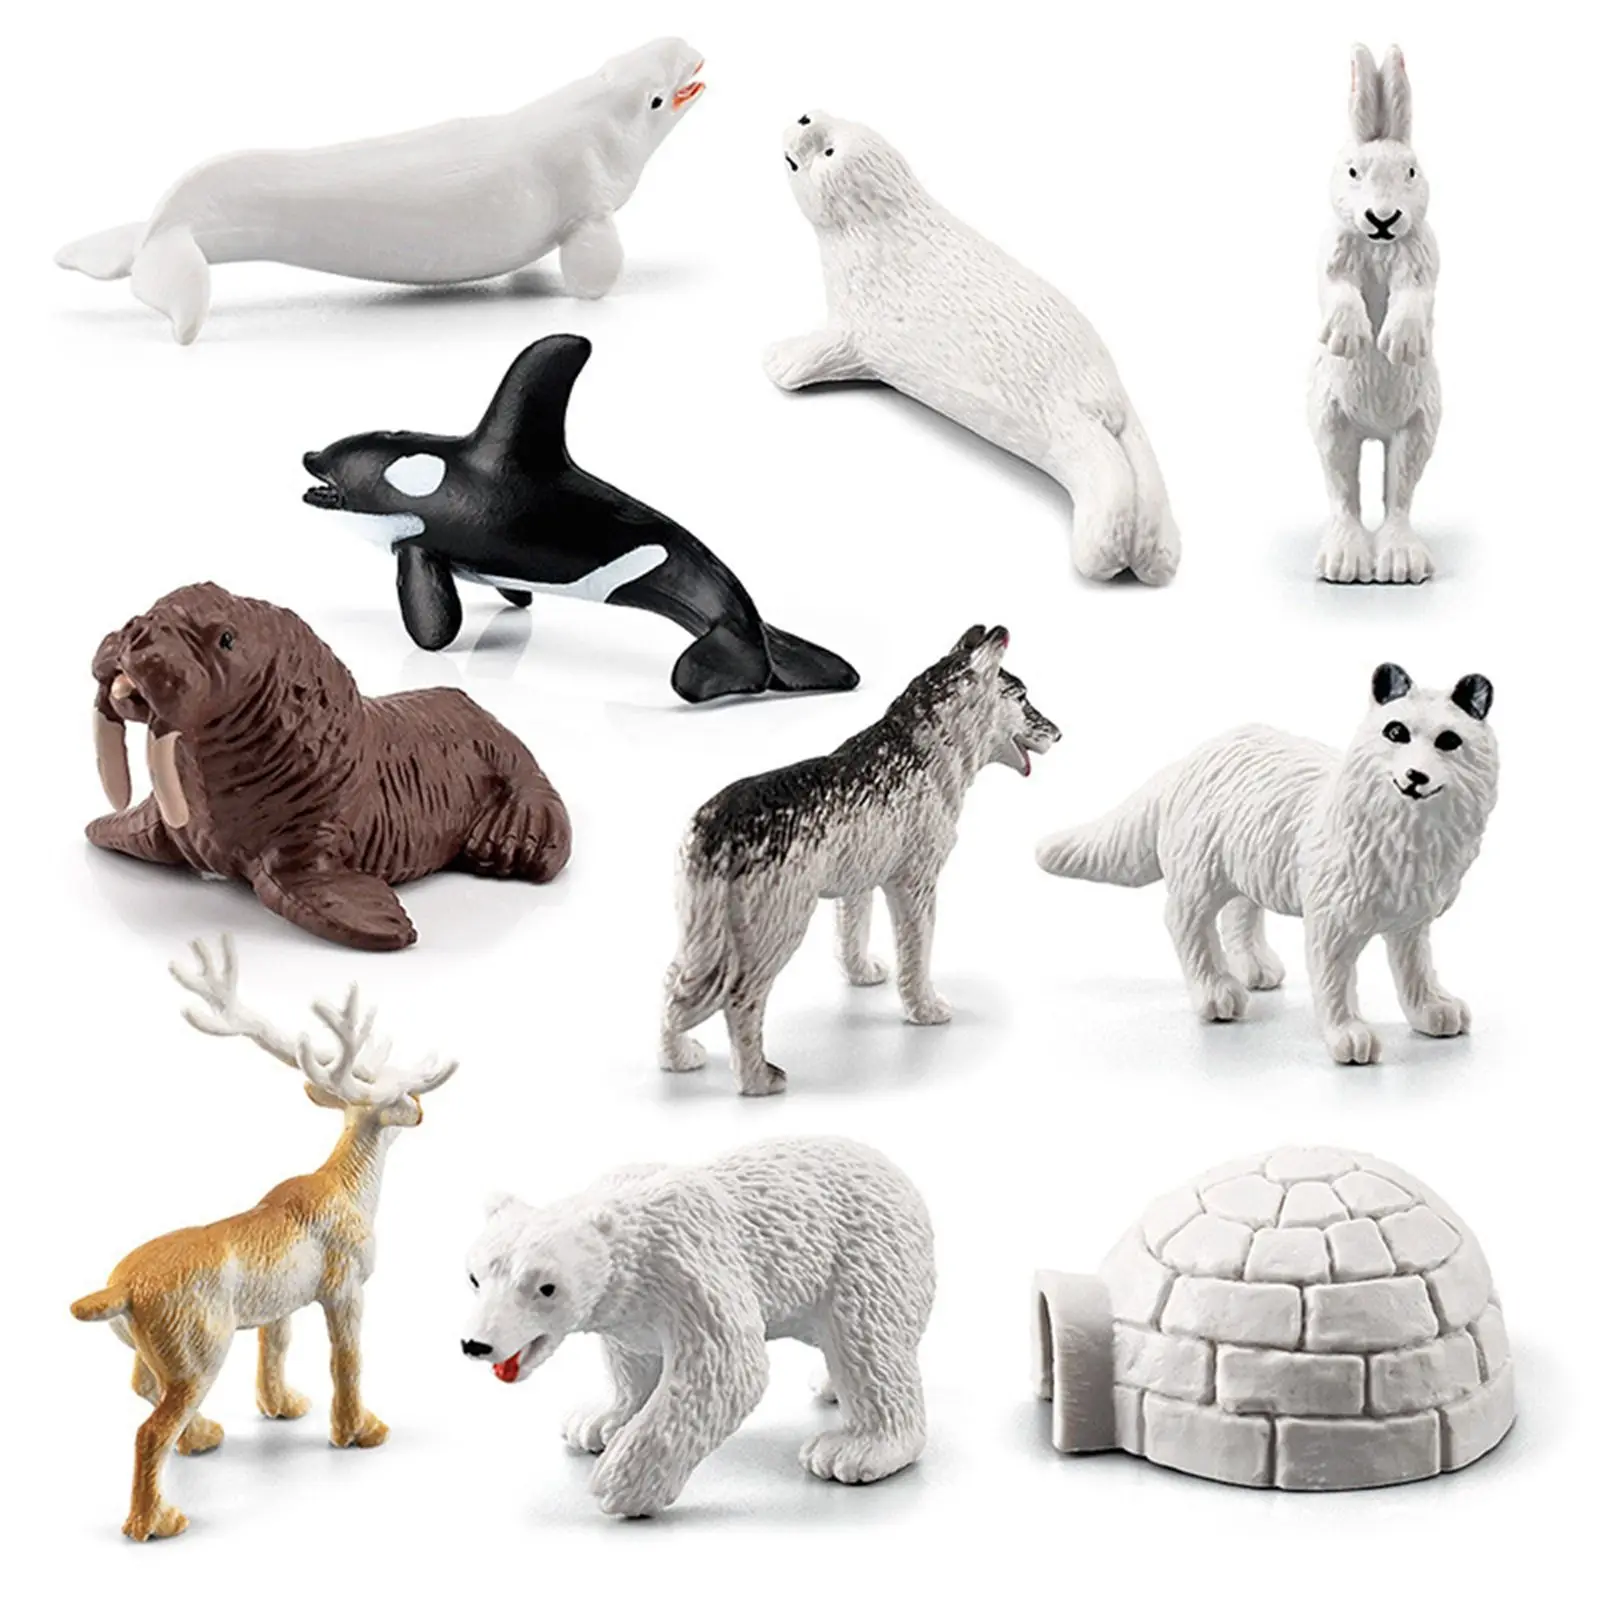 10x Realistic Polar Animal Figurines Miniature Statues Toys for Home Desktop Decor Kids Gift